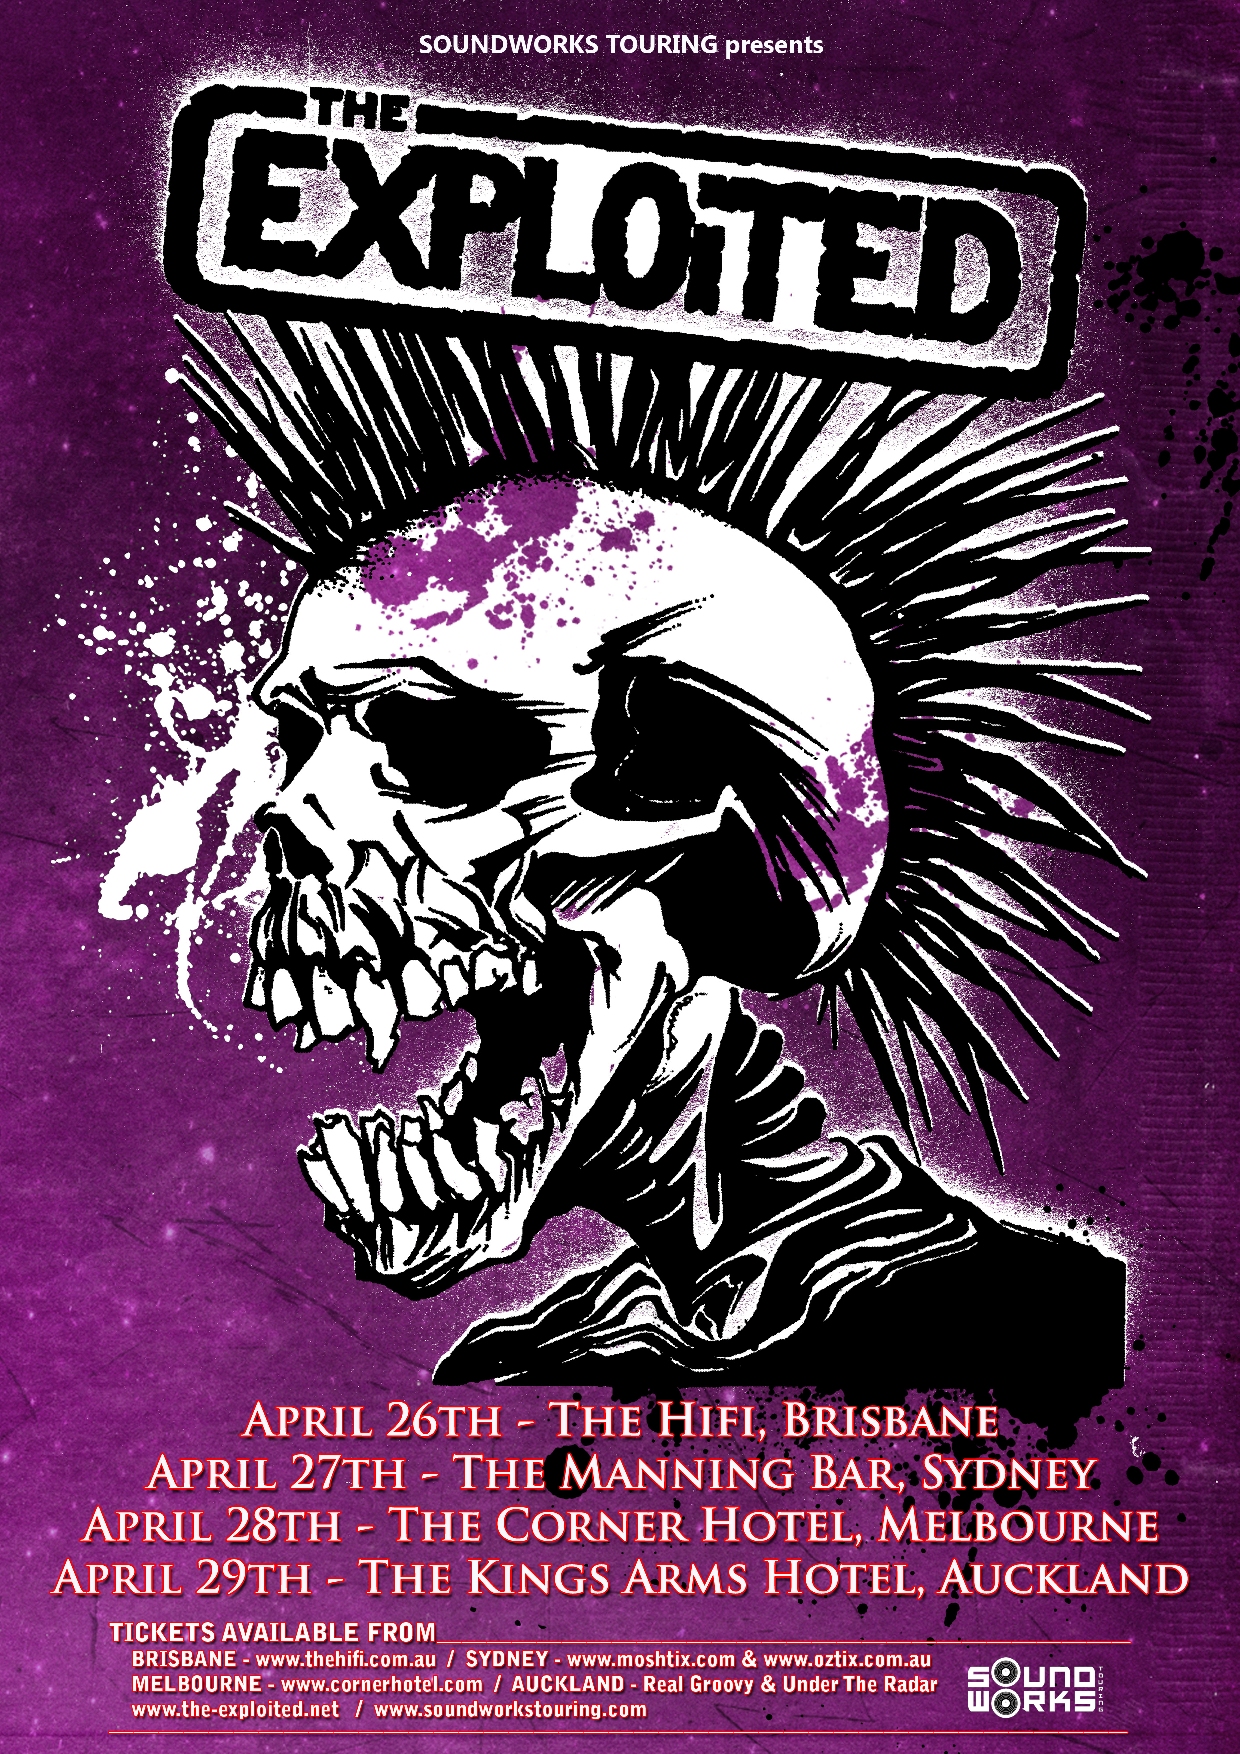 The Exploited announced Australian tour